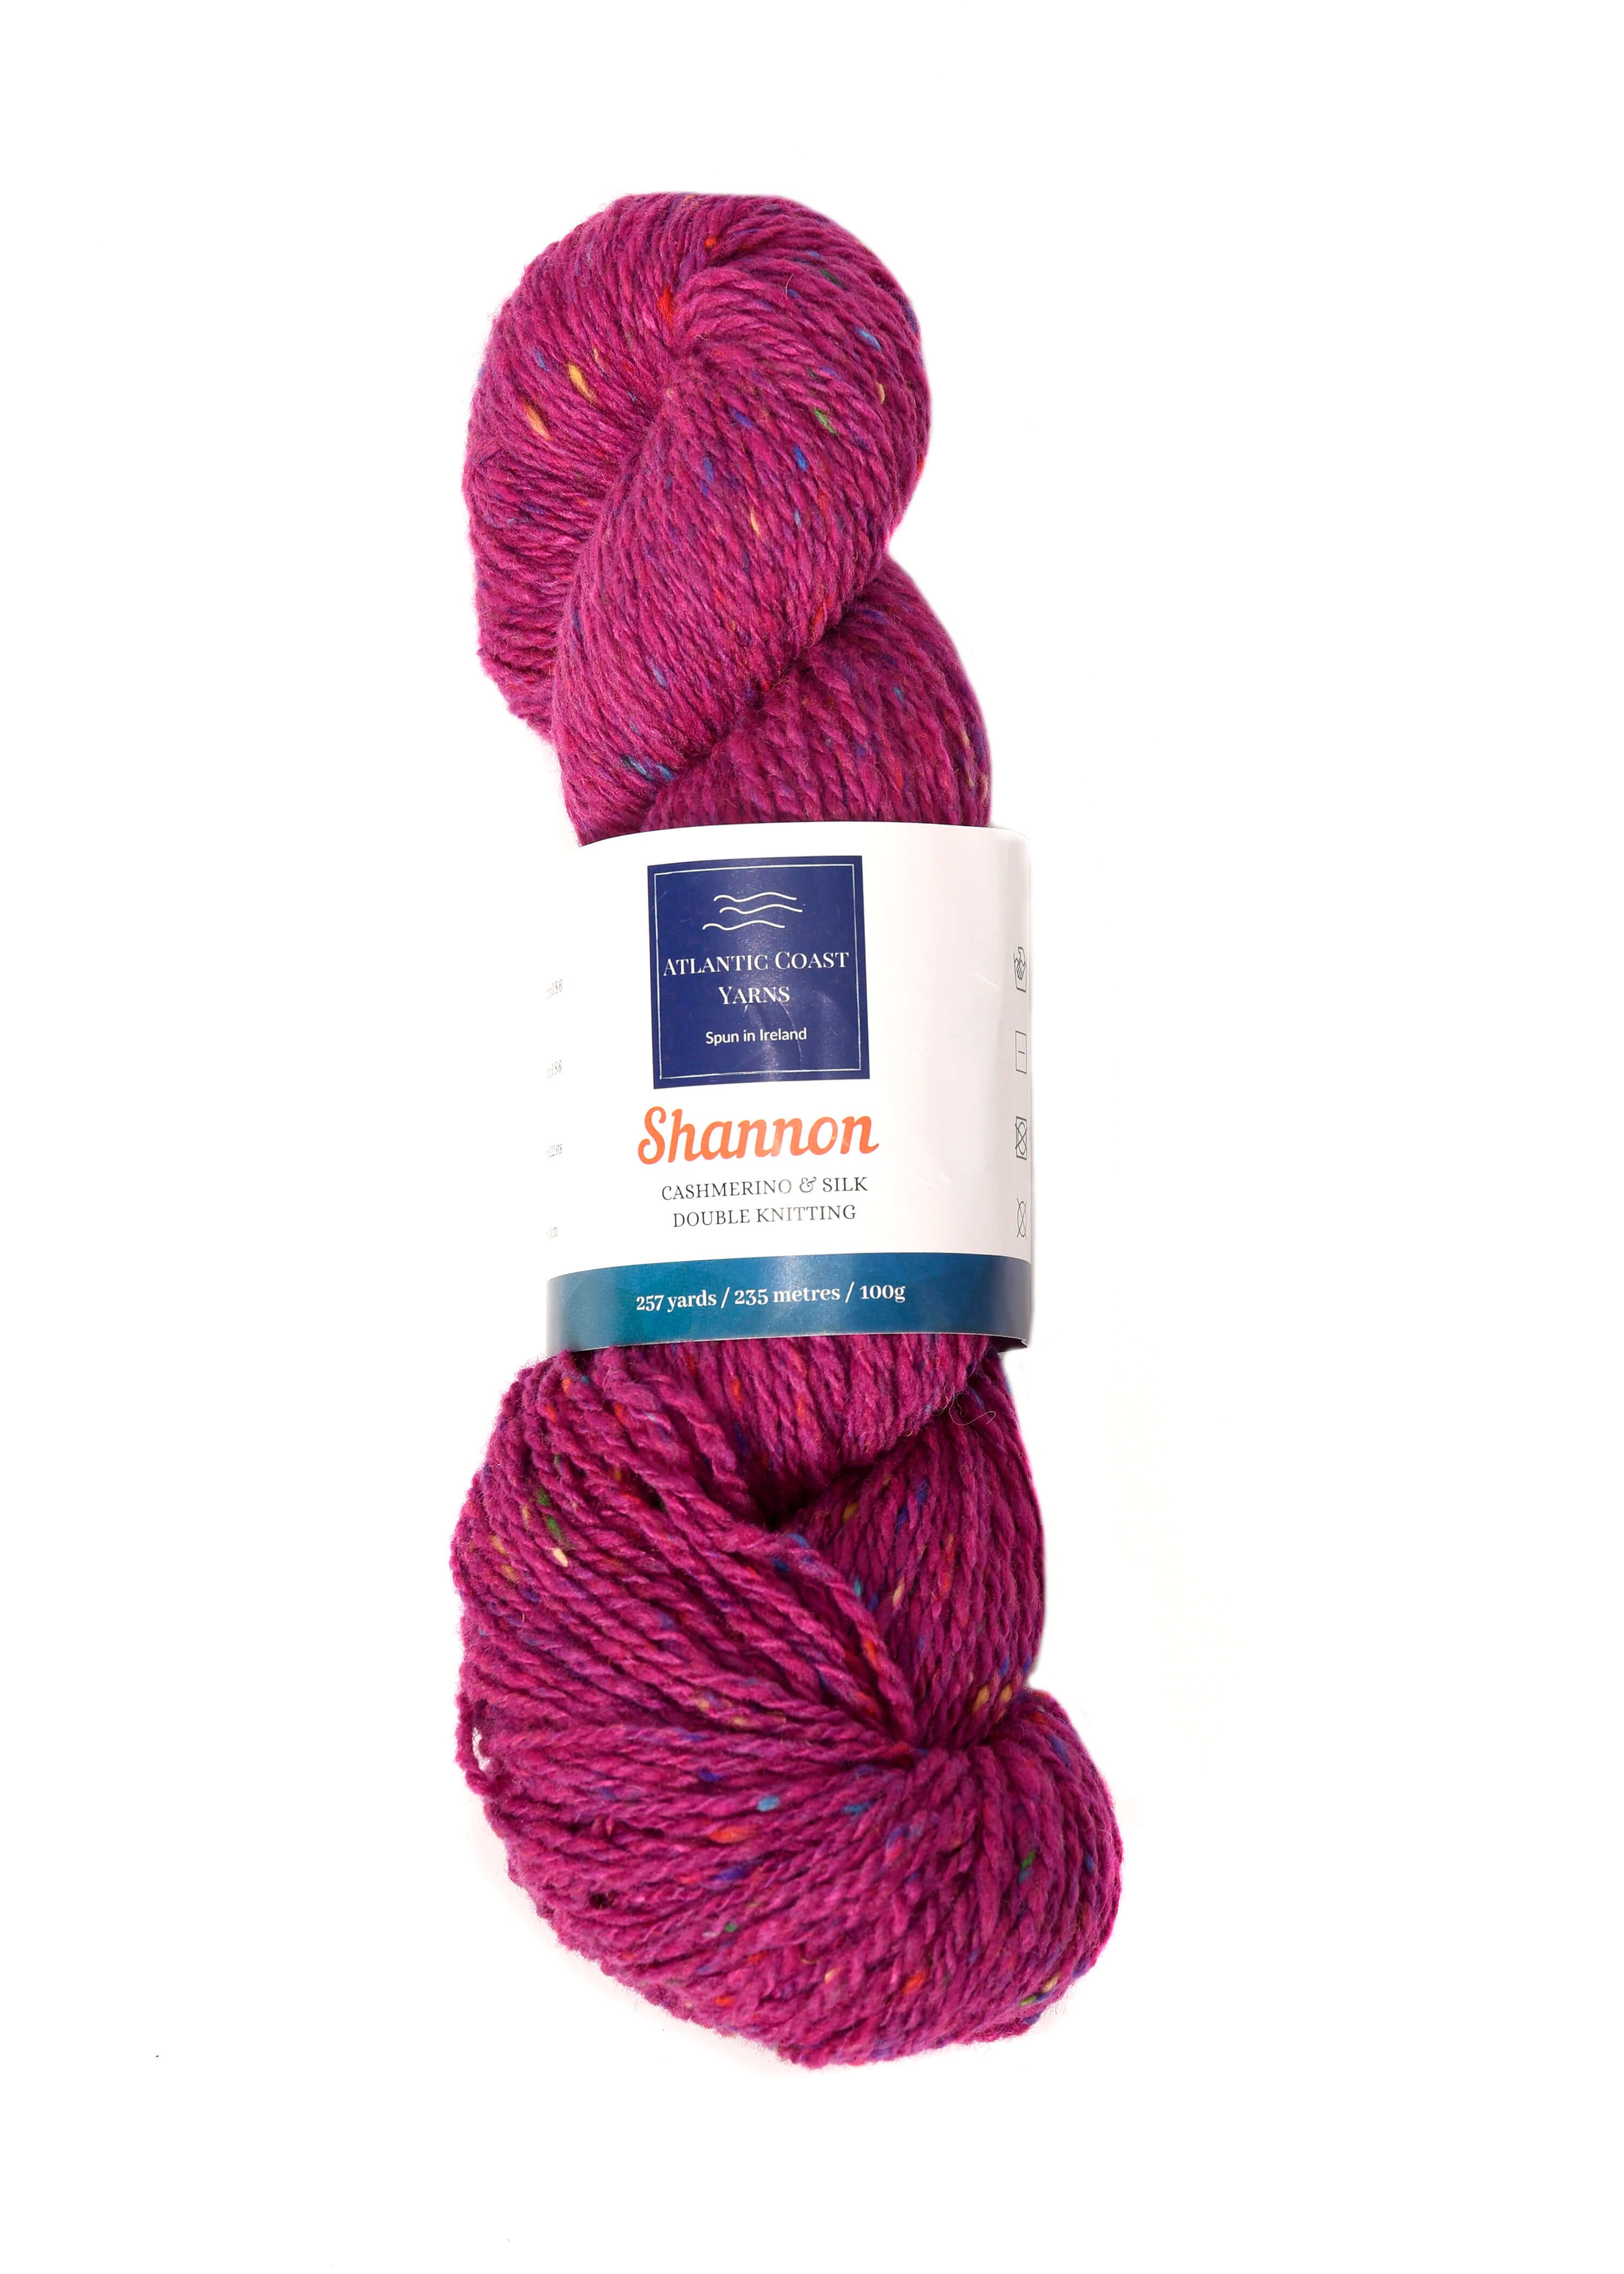 100g Cashmerino and Silk Yarn - Pink